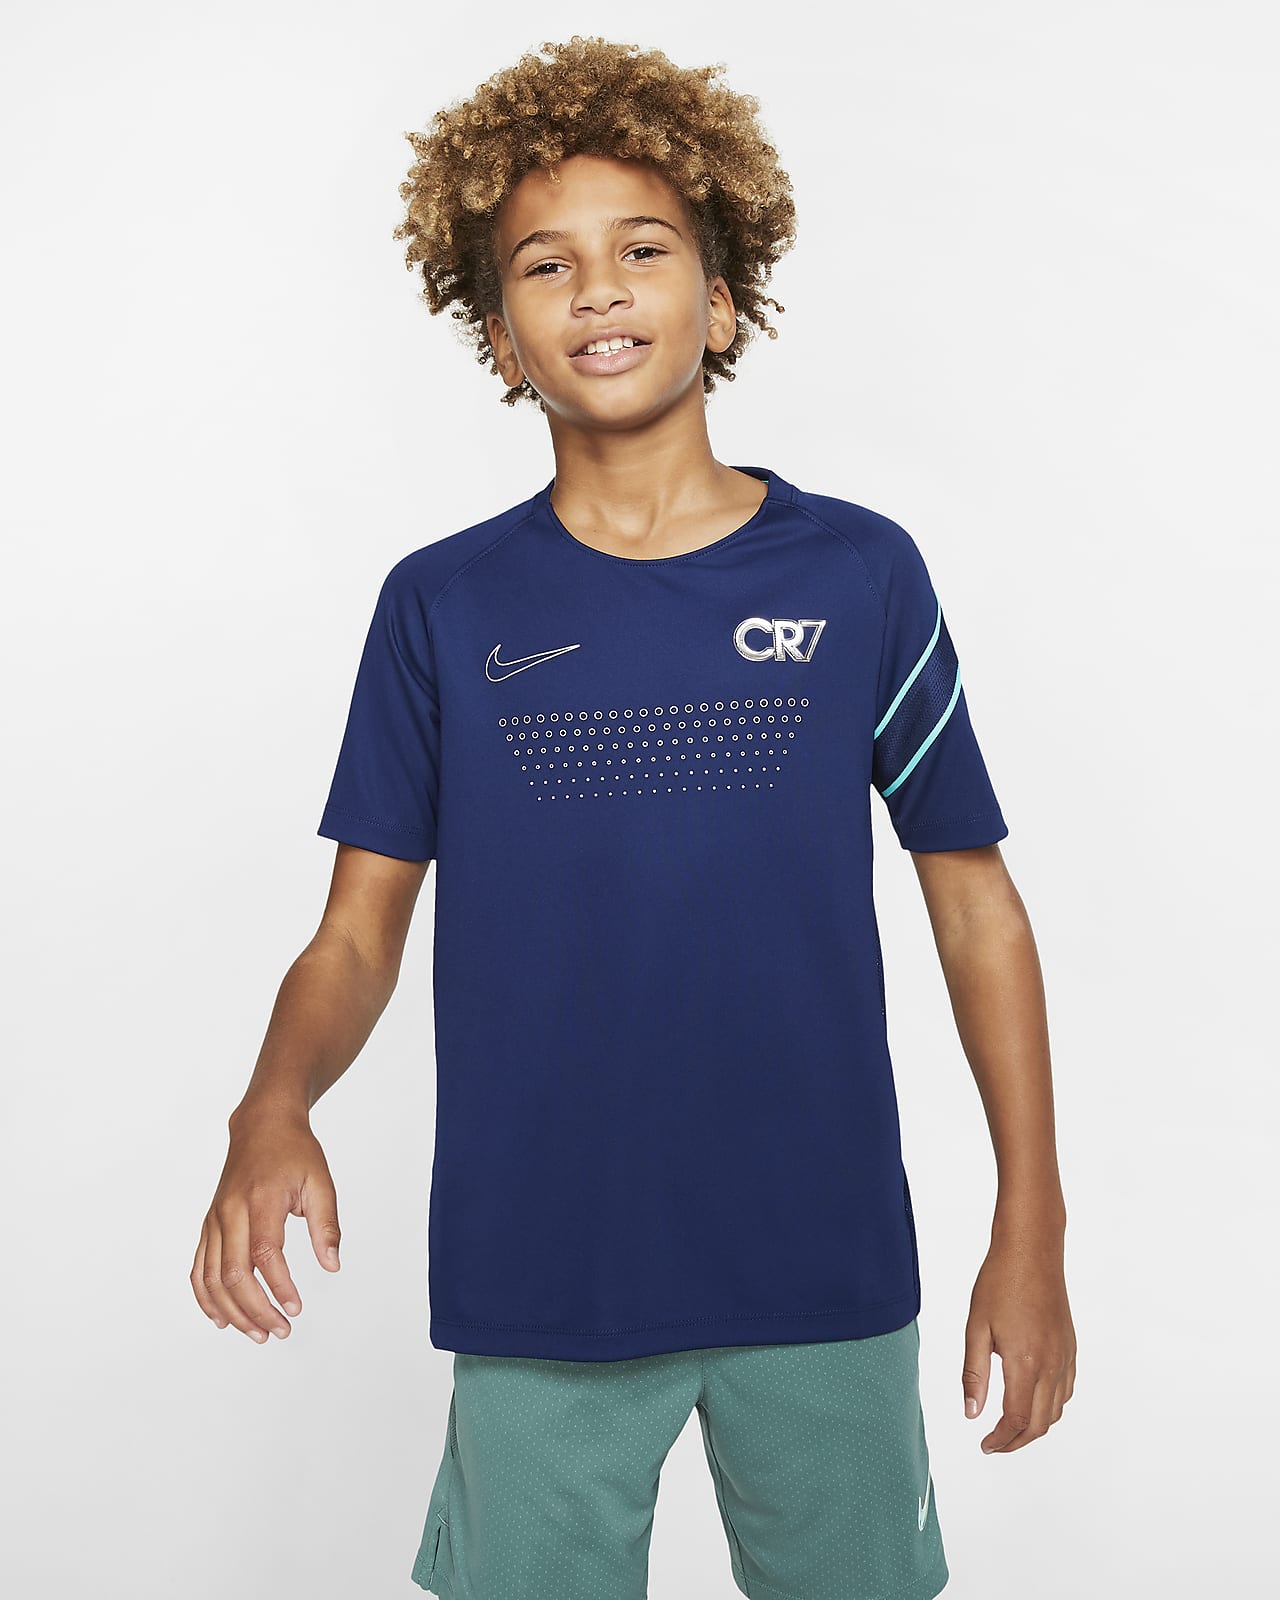 Nike Dri-FIT CR7 Older Kids' Short-Sleeve Football Top. Nike SG